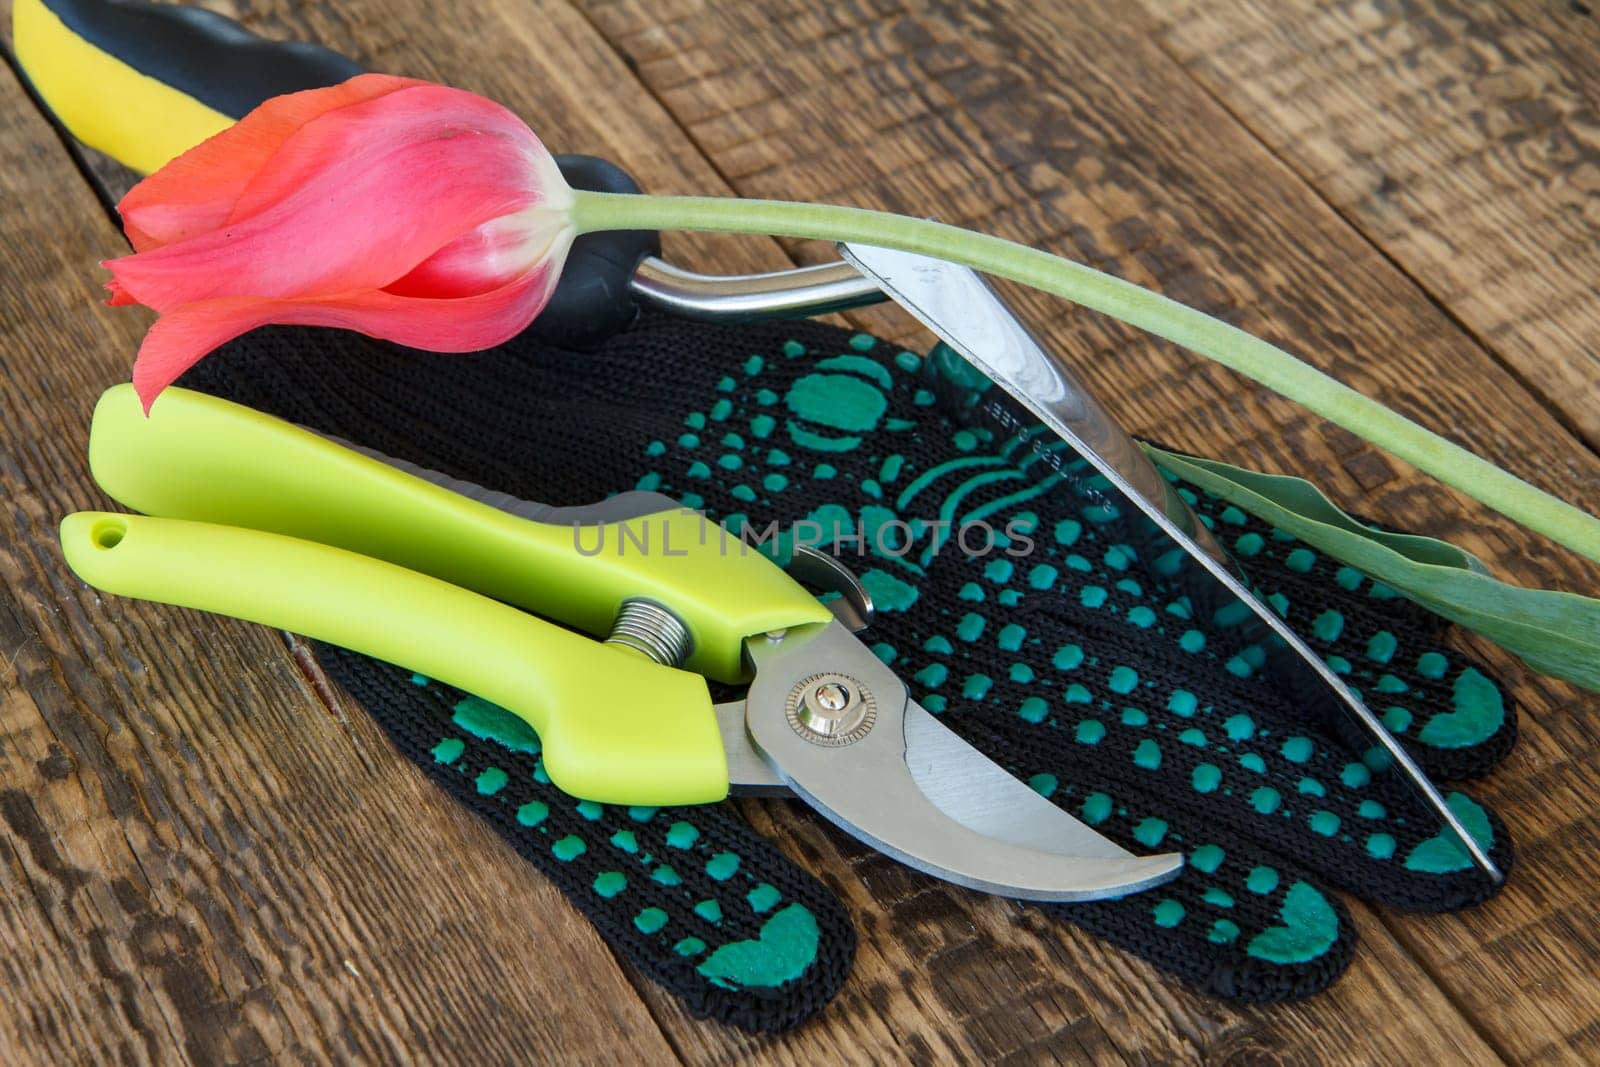 Garden black glove, pruner, hand trowel and cut red tulip on wooden boards. Garden tools and equipment.